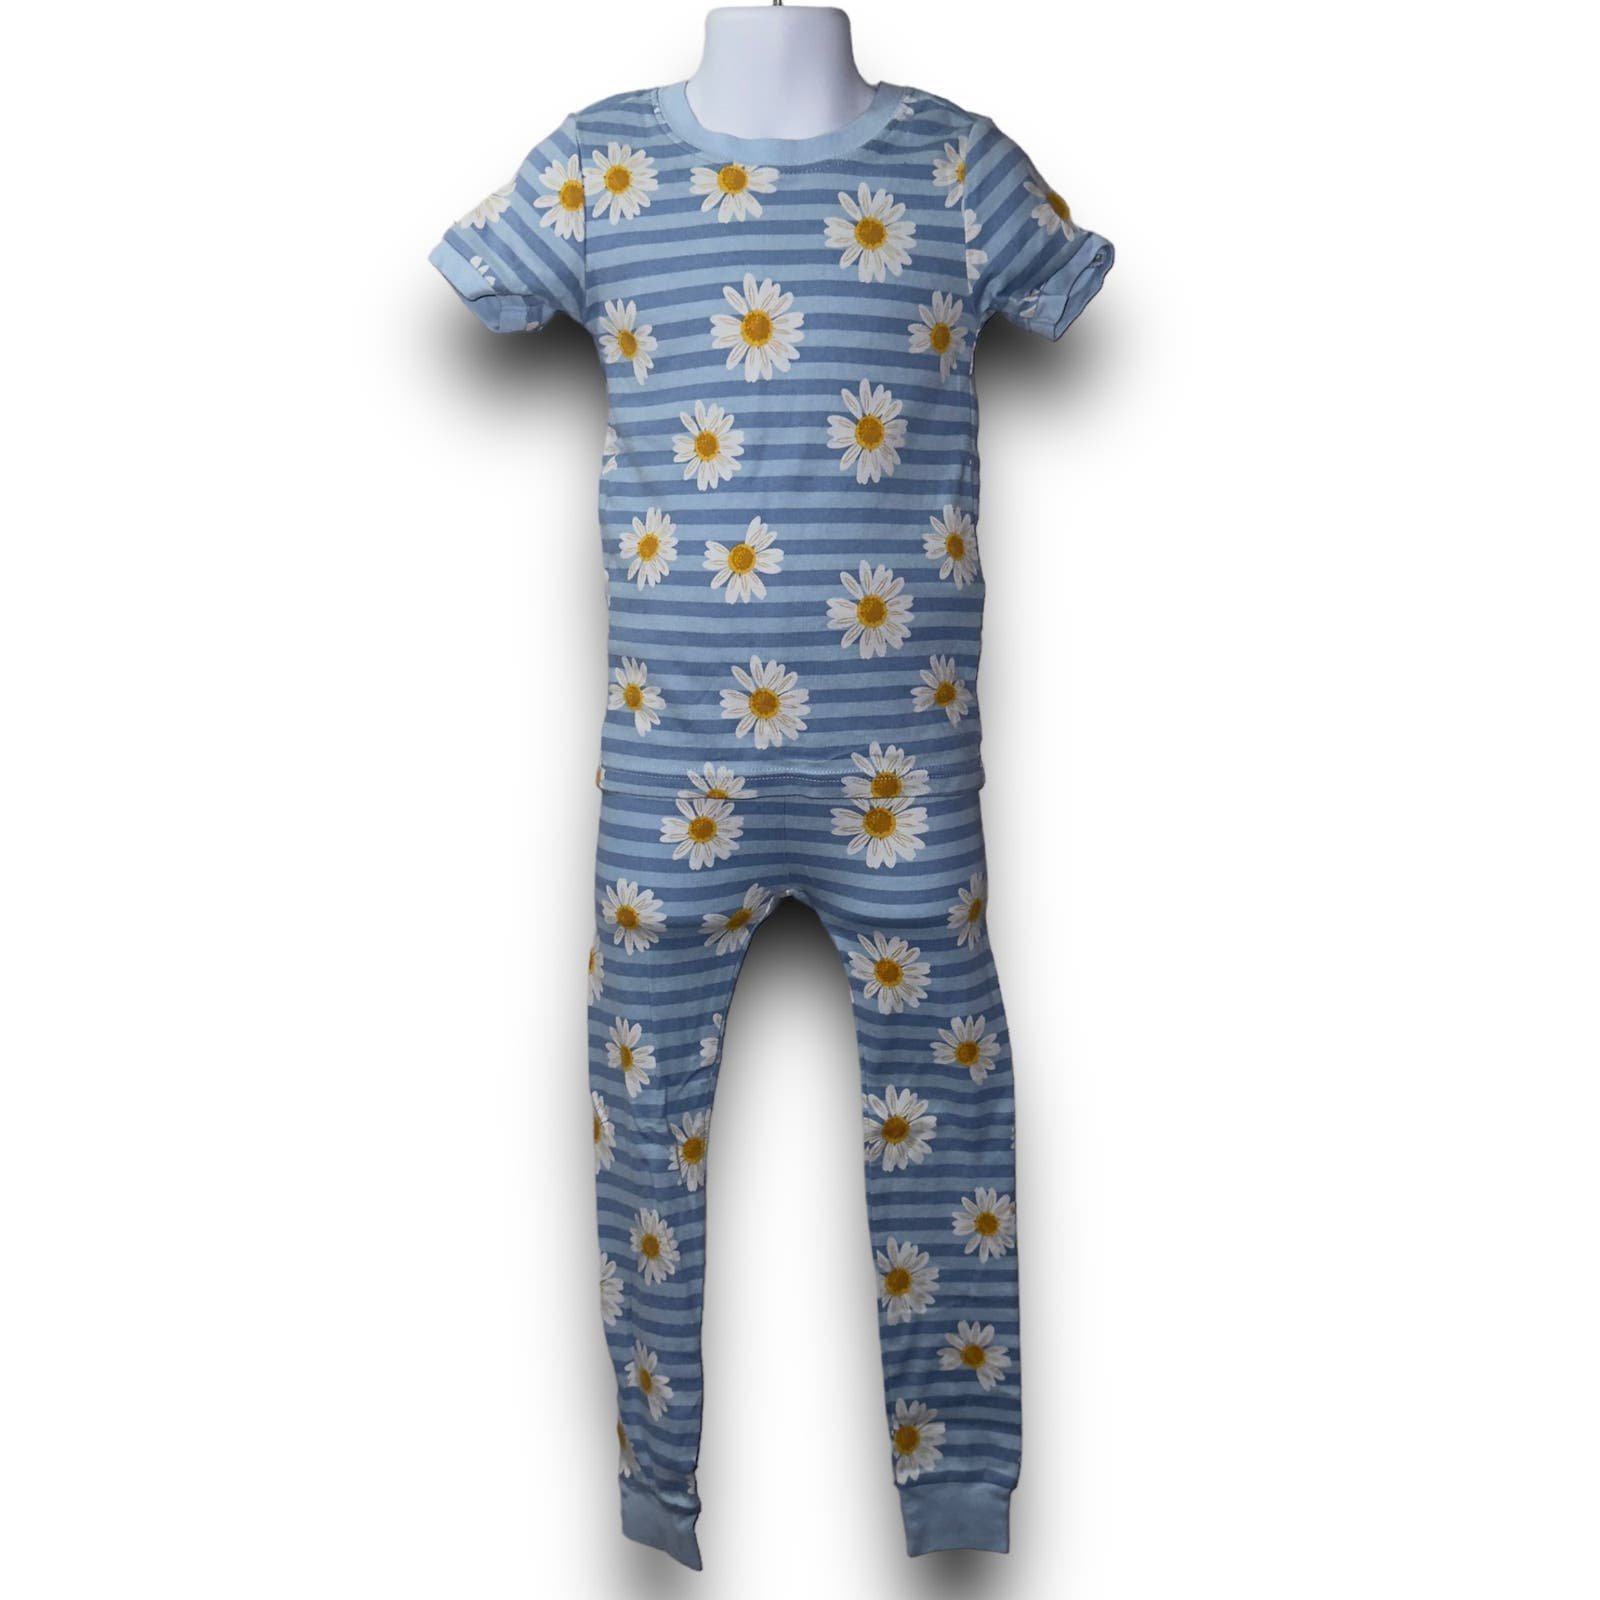 Old navy blue floral pajama set toddler size 5T 62MABJY